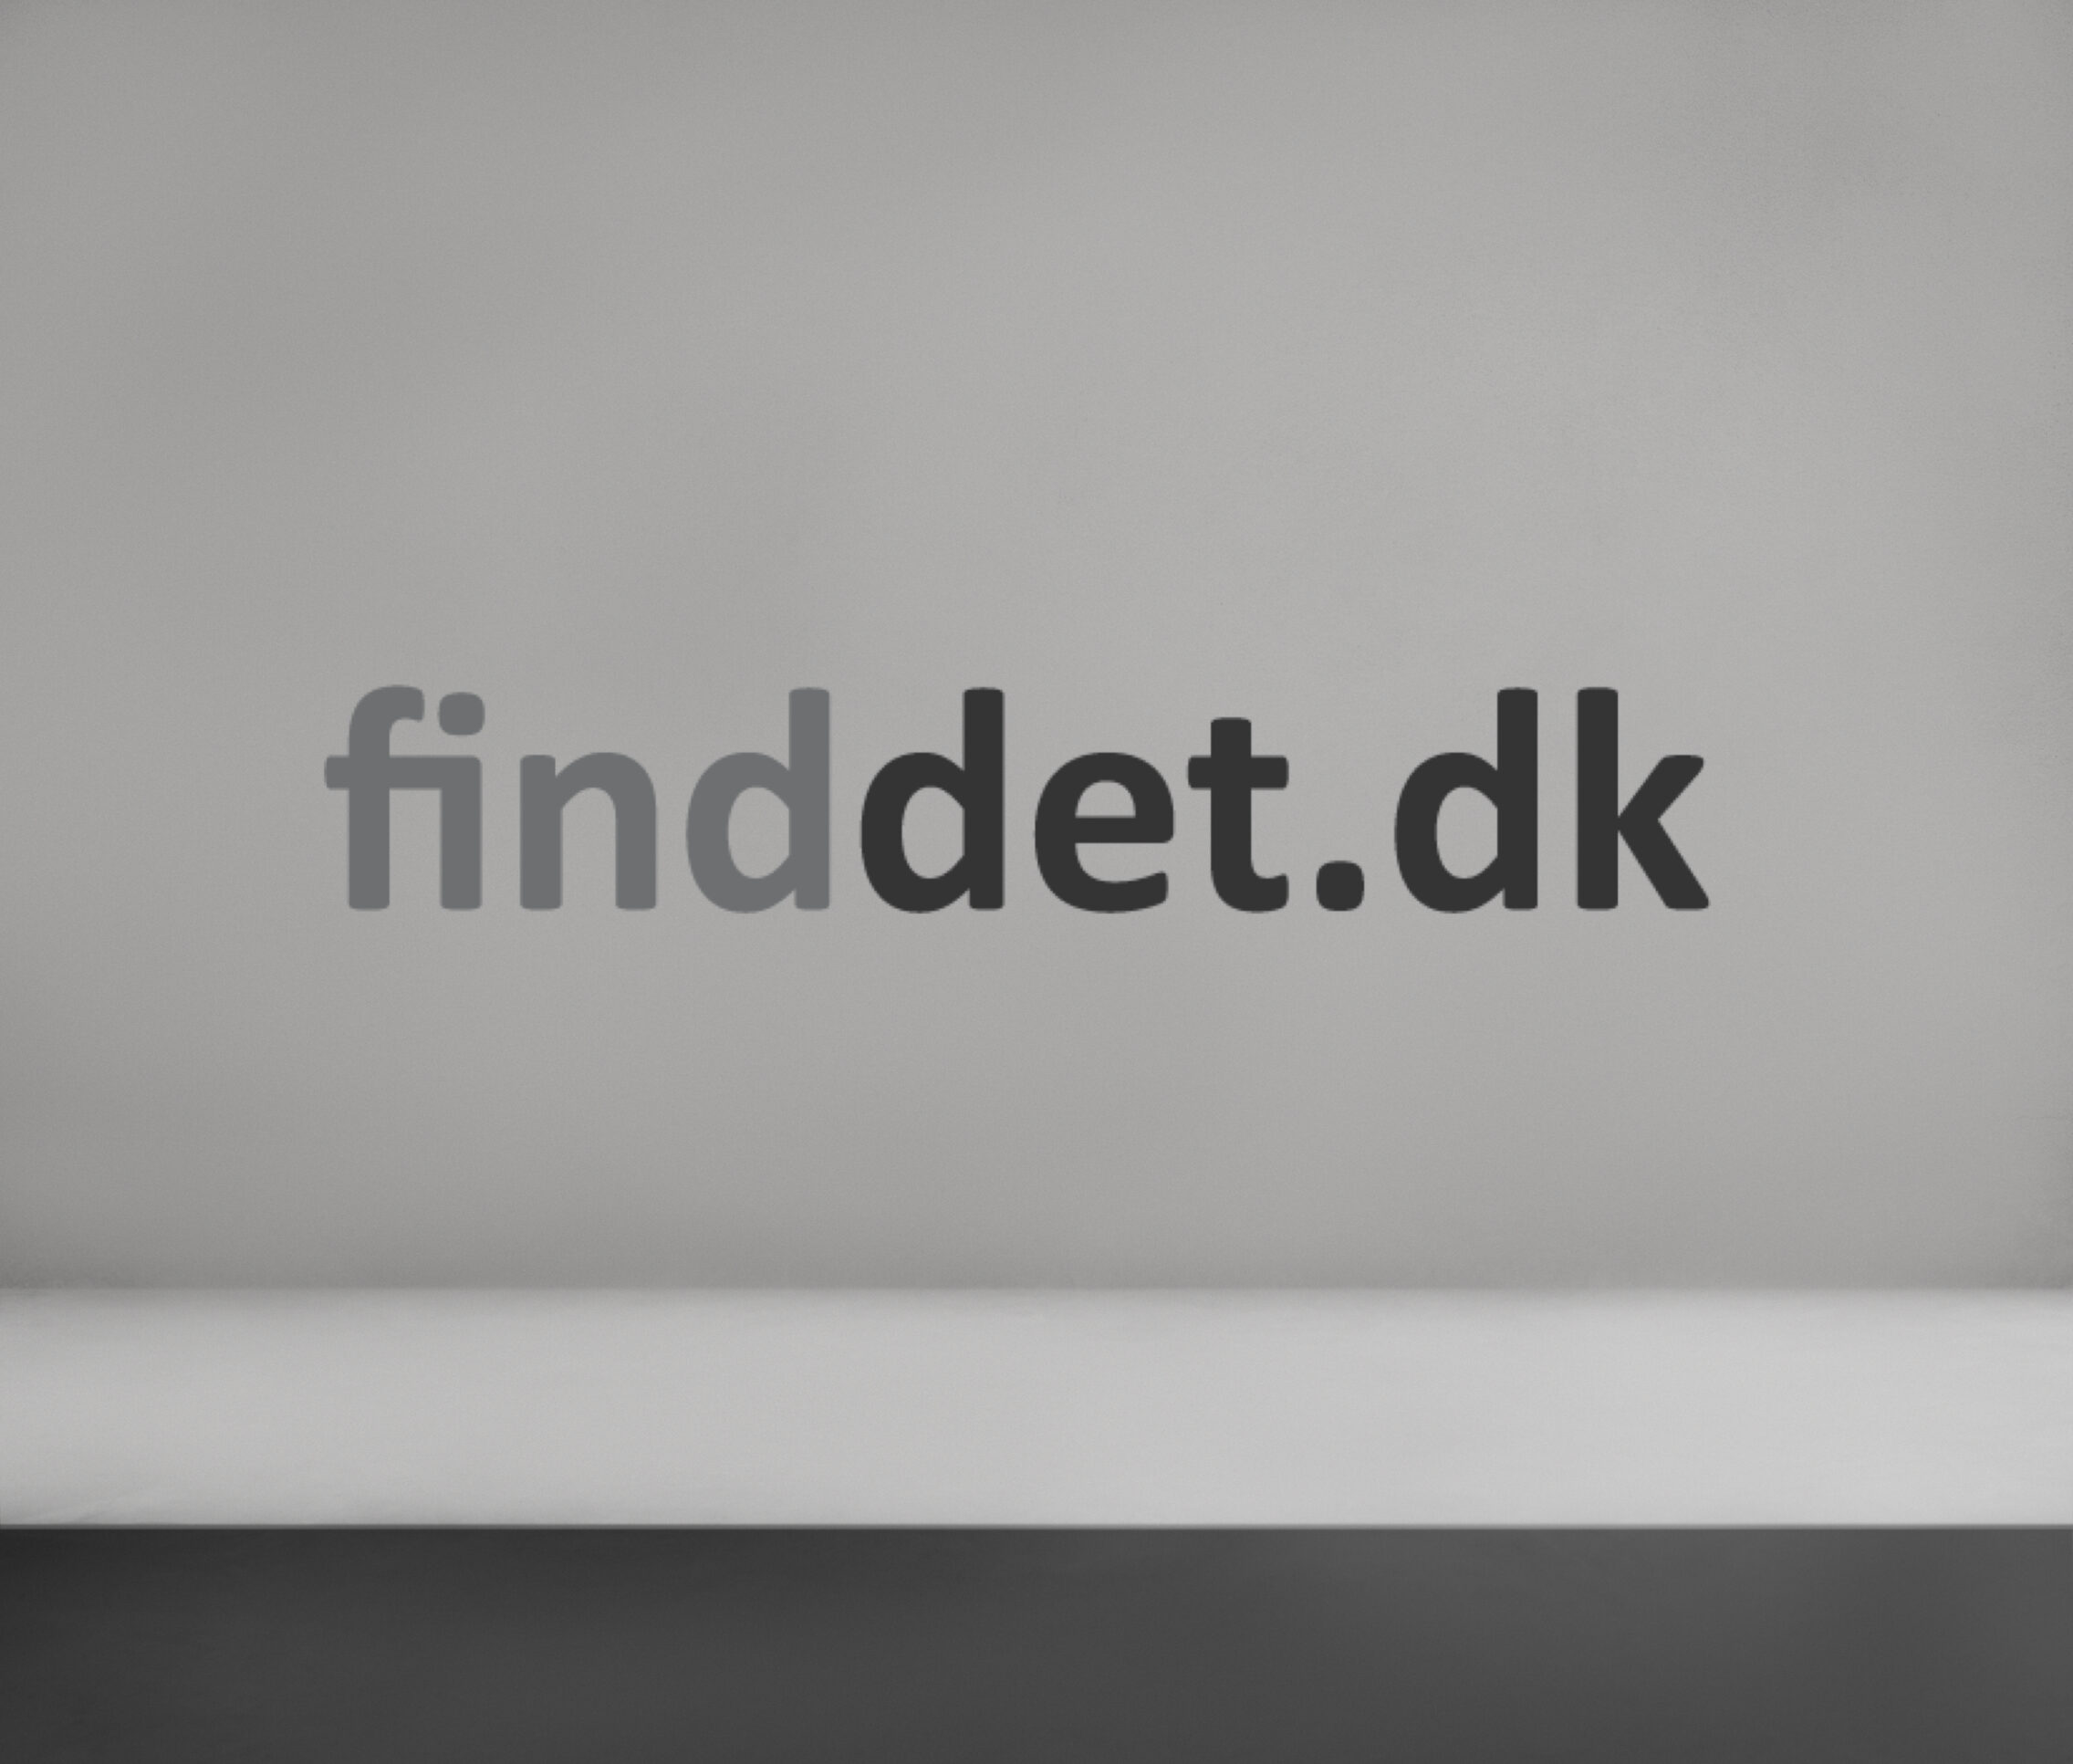 jyd-project-finddet-smart-ads-newspaper-widget